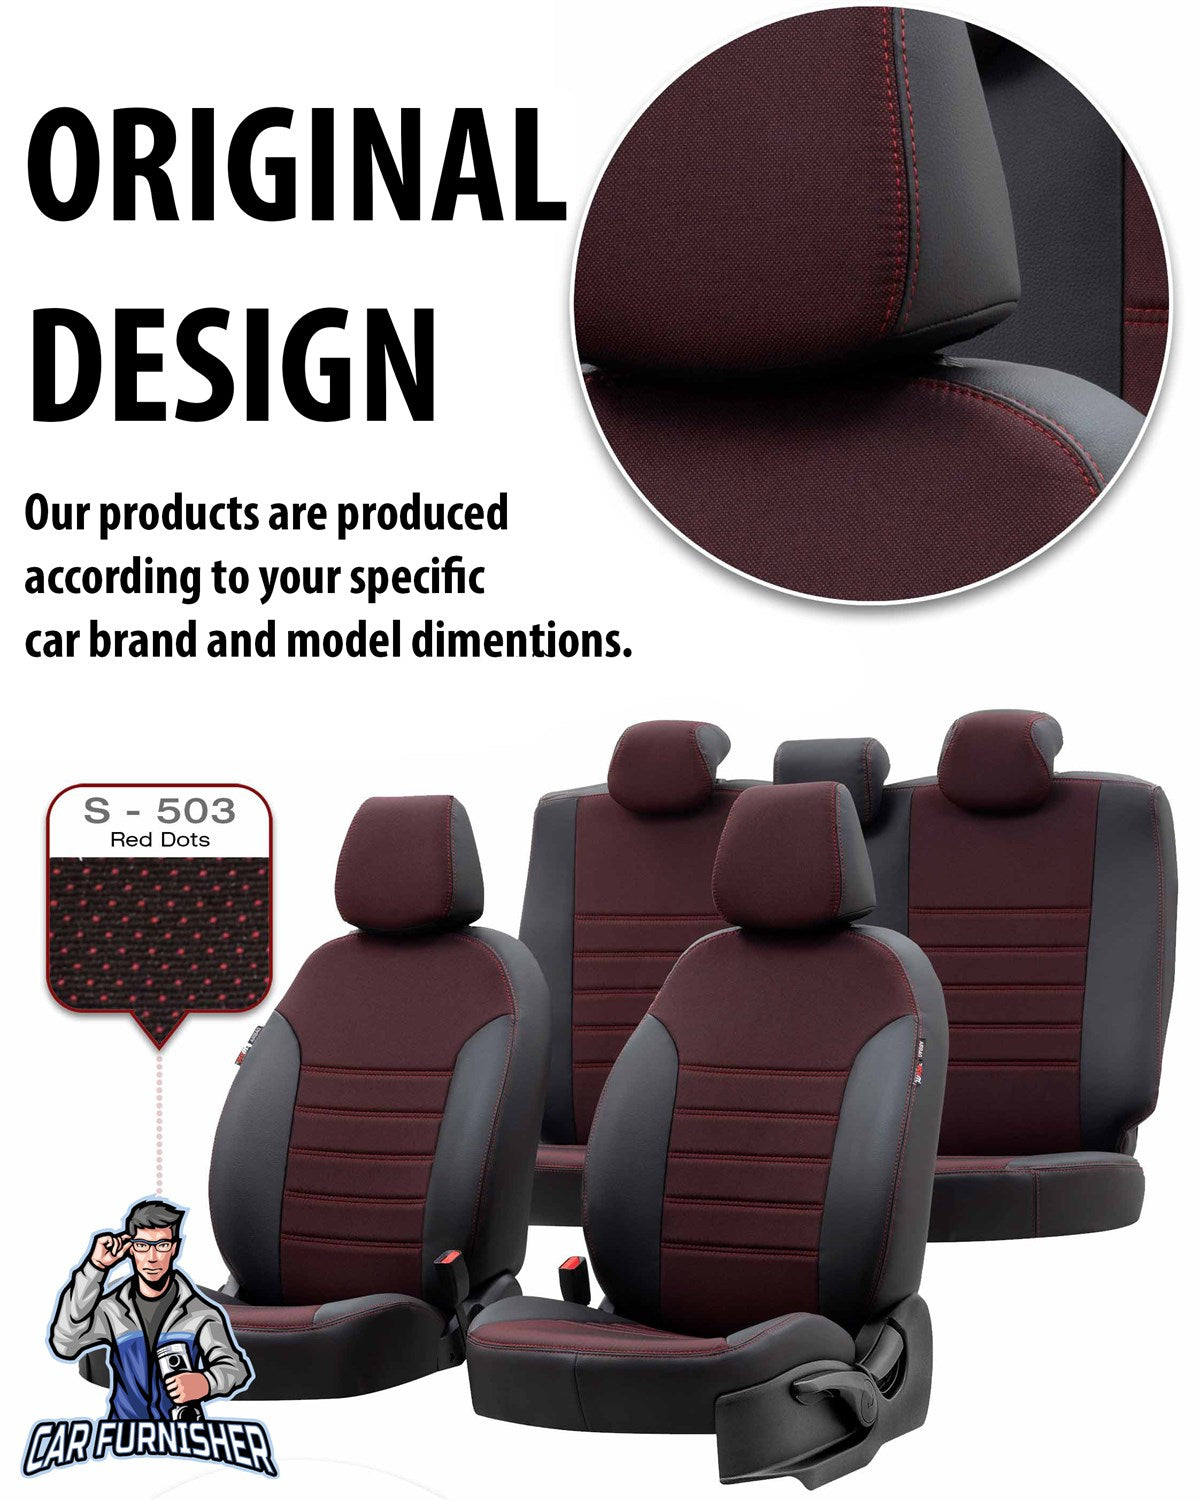 Tesla Model Y Seat Cover Paris Leather & Jacquard Design Black Leather & Jacquard Fabric